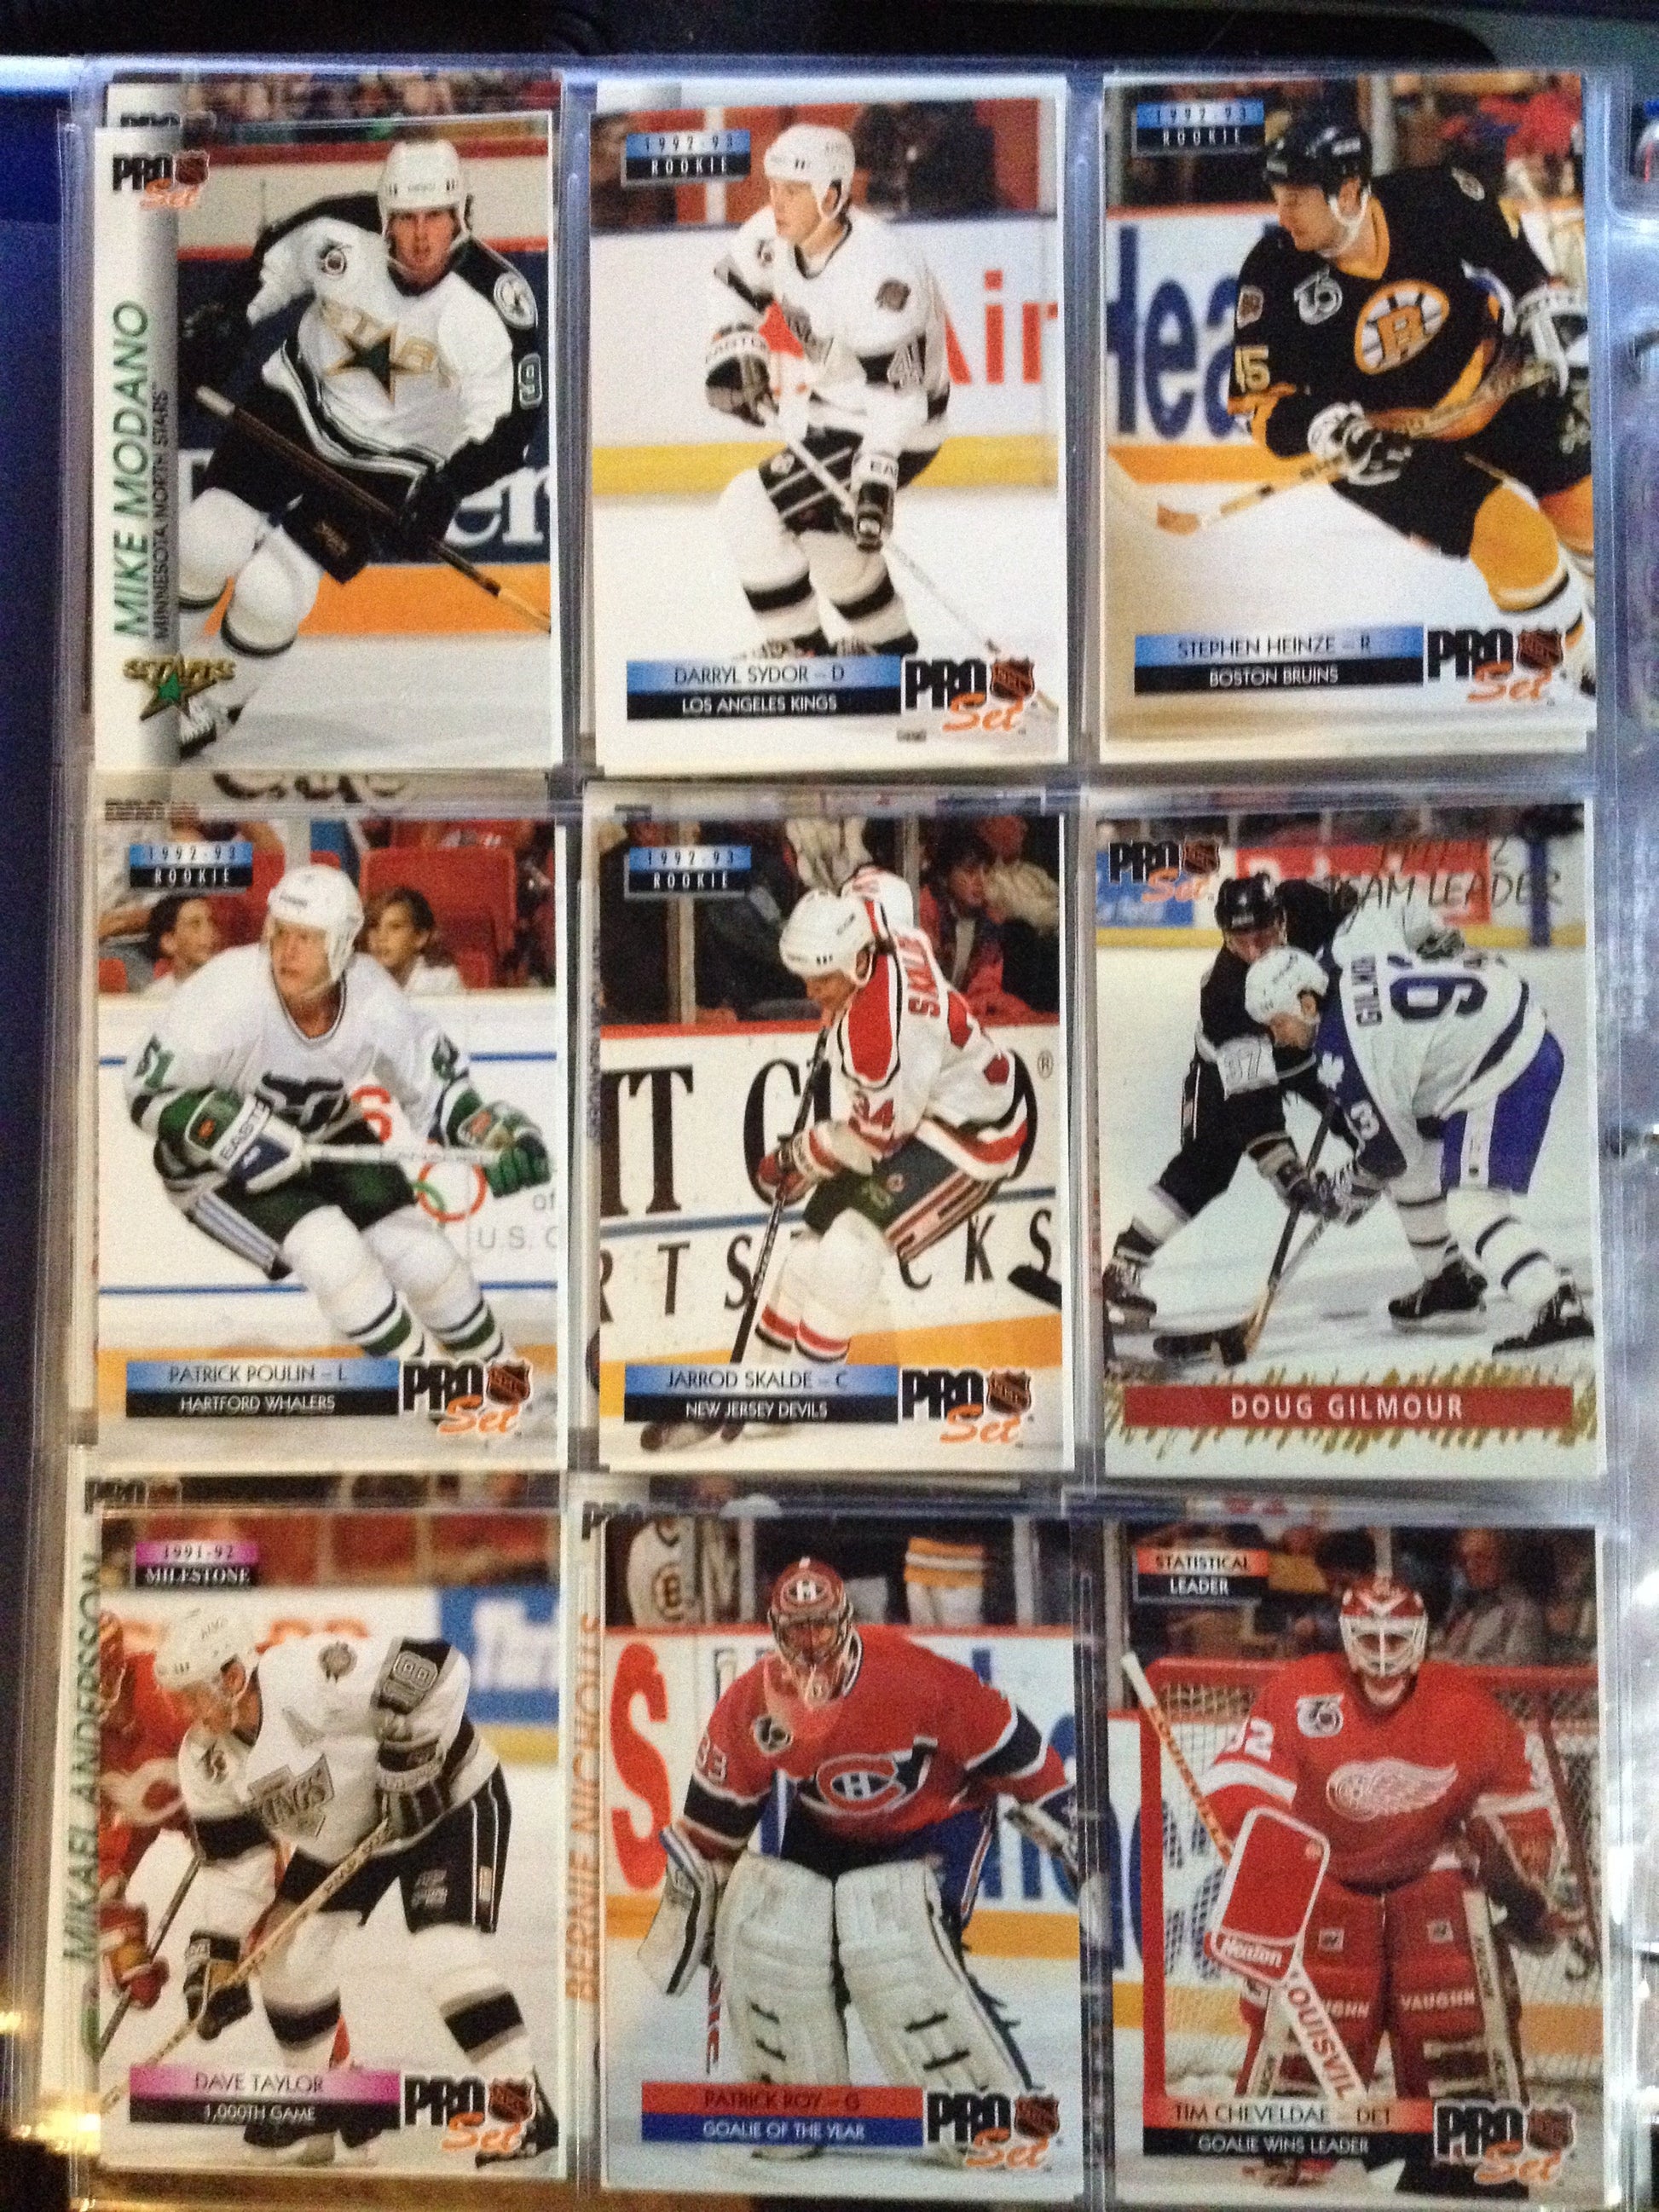 DOUG WILSON # 203 - 1990-91 Topps Hockey Card